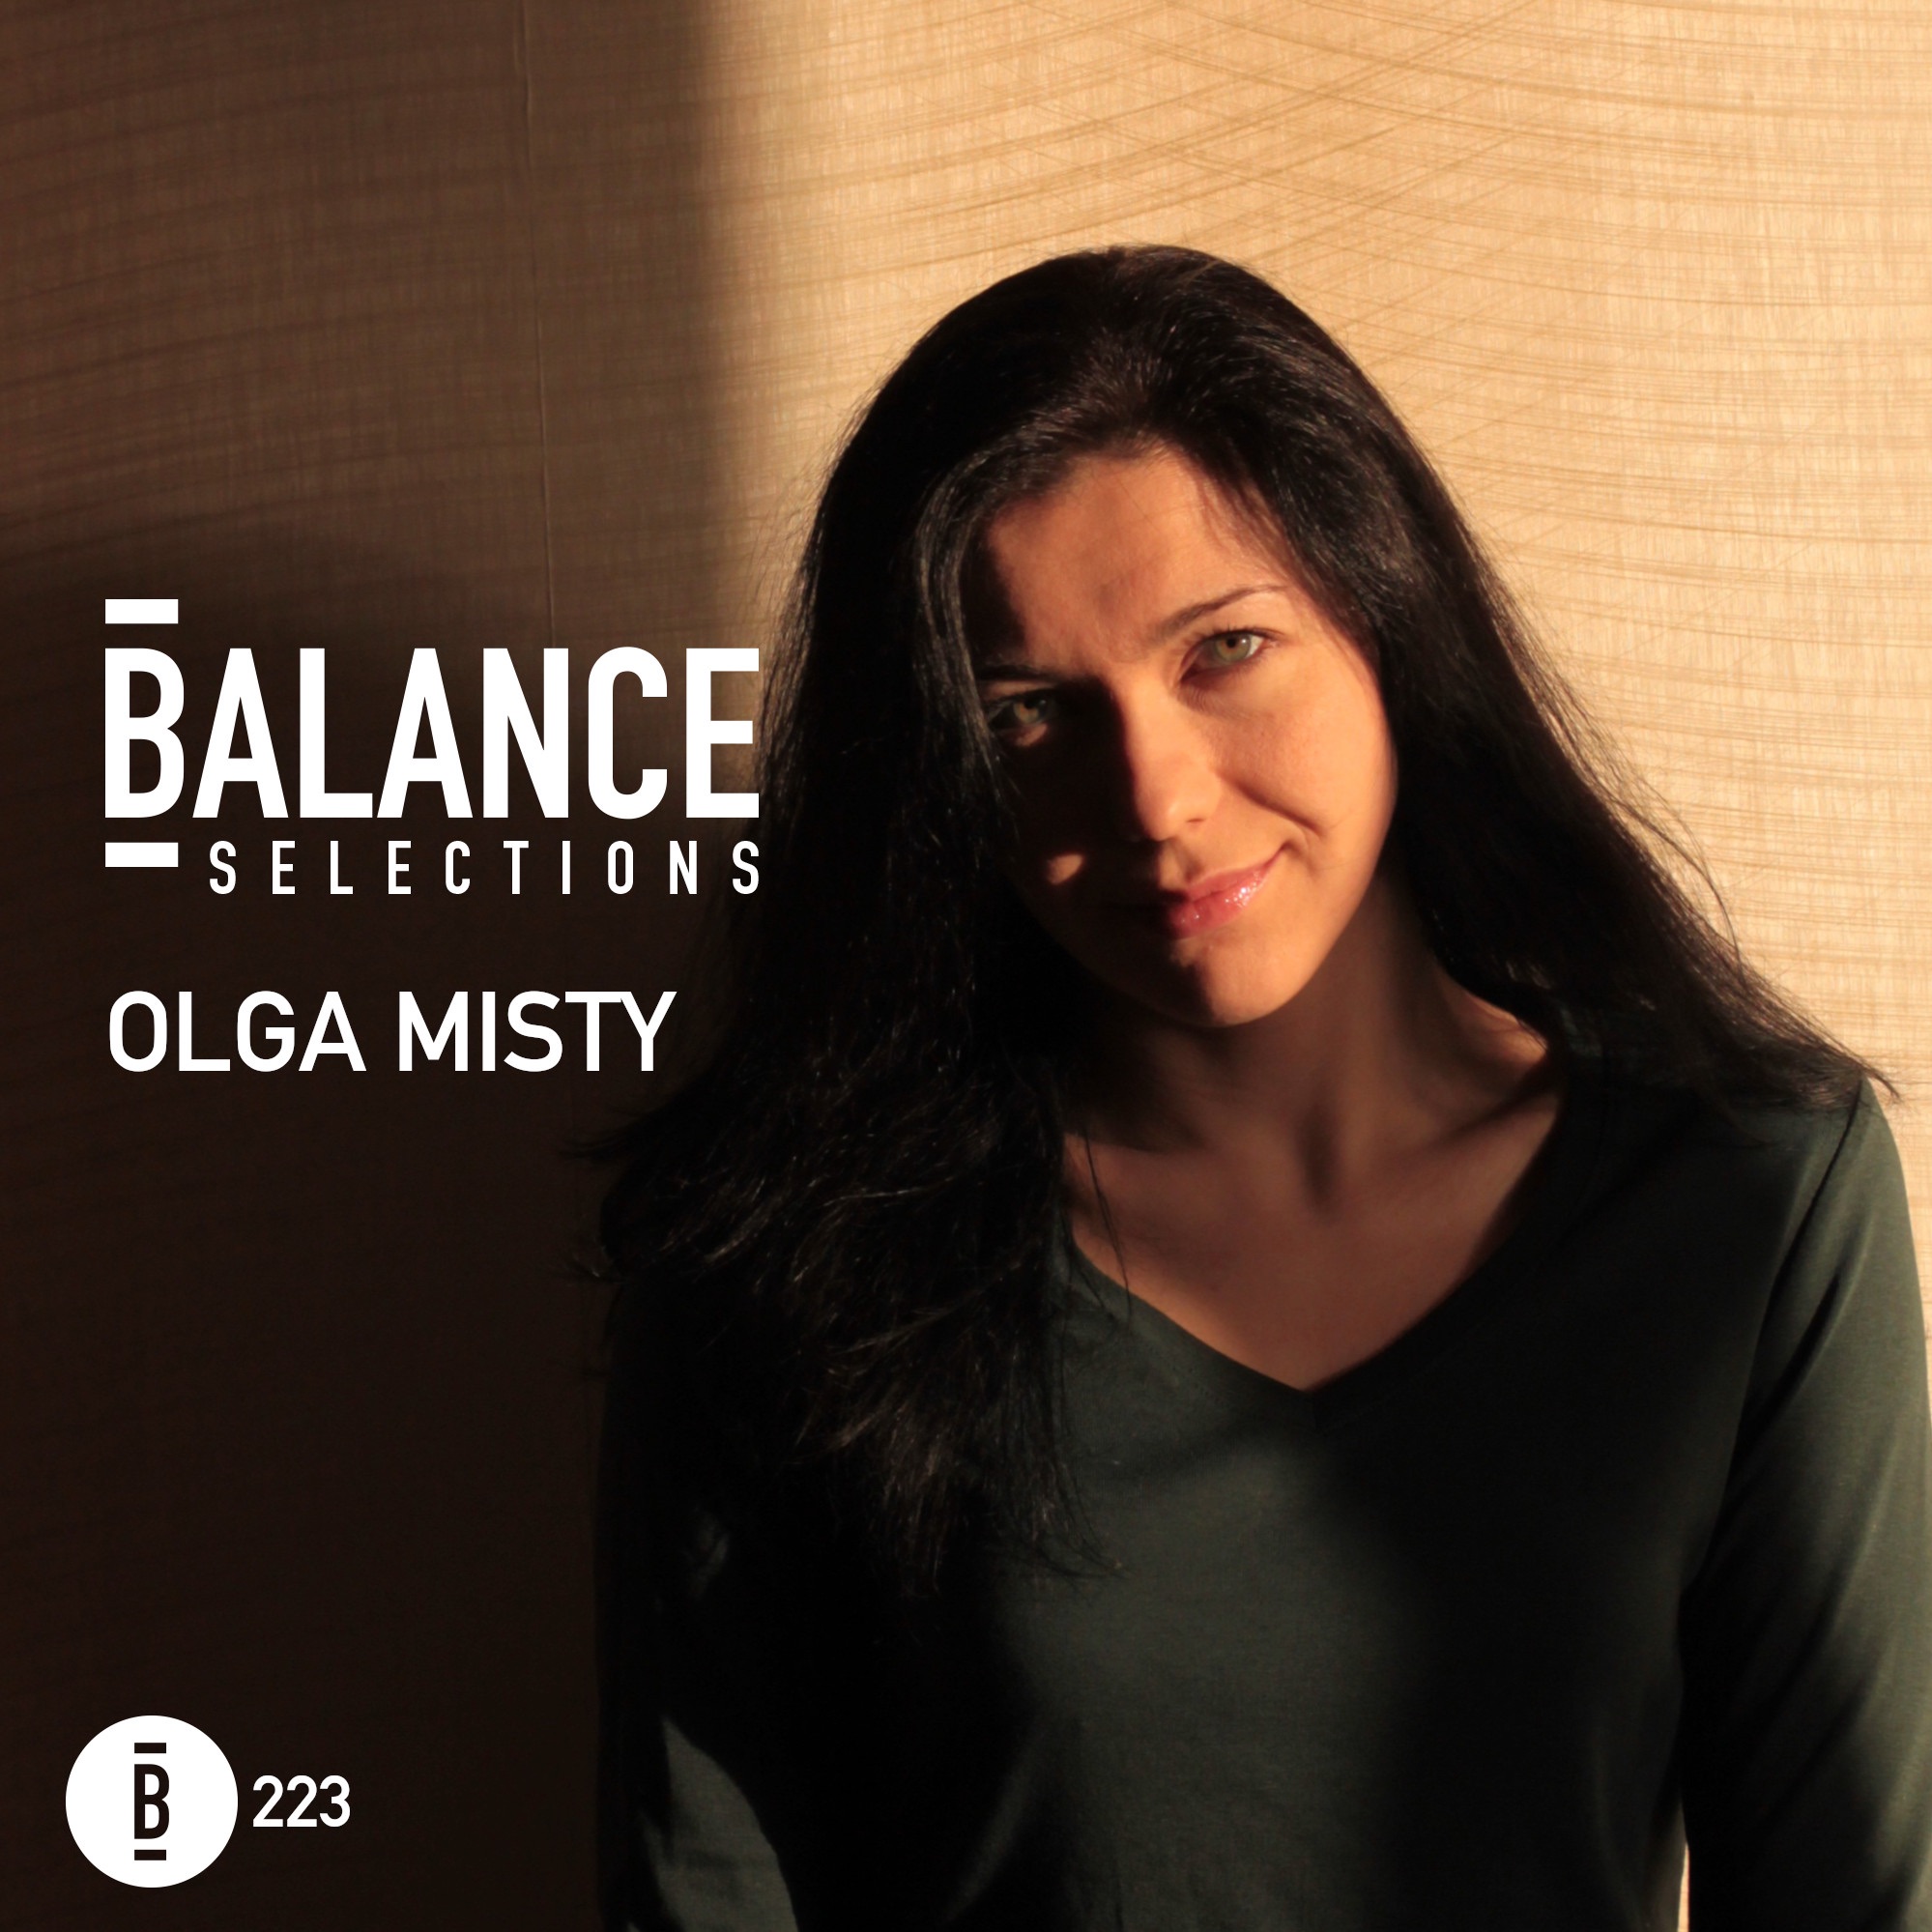 I-download Balance Selections 223: Olga Misty